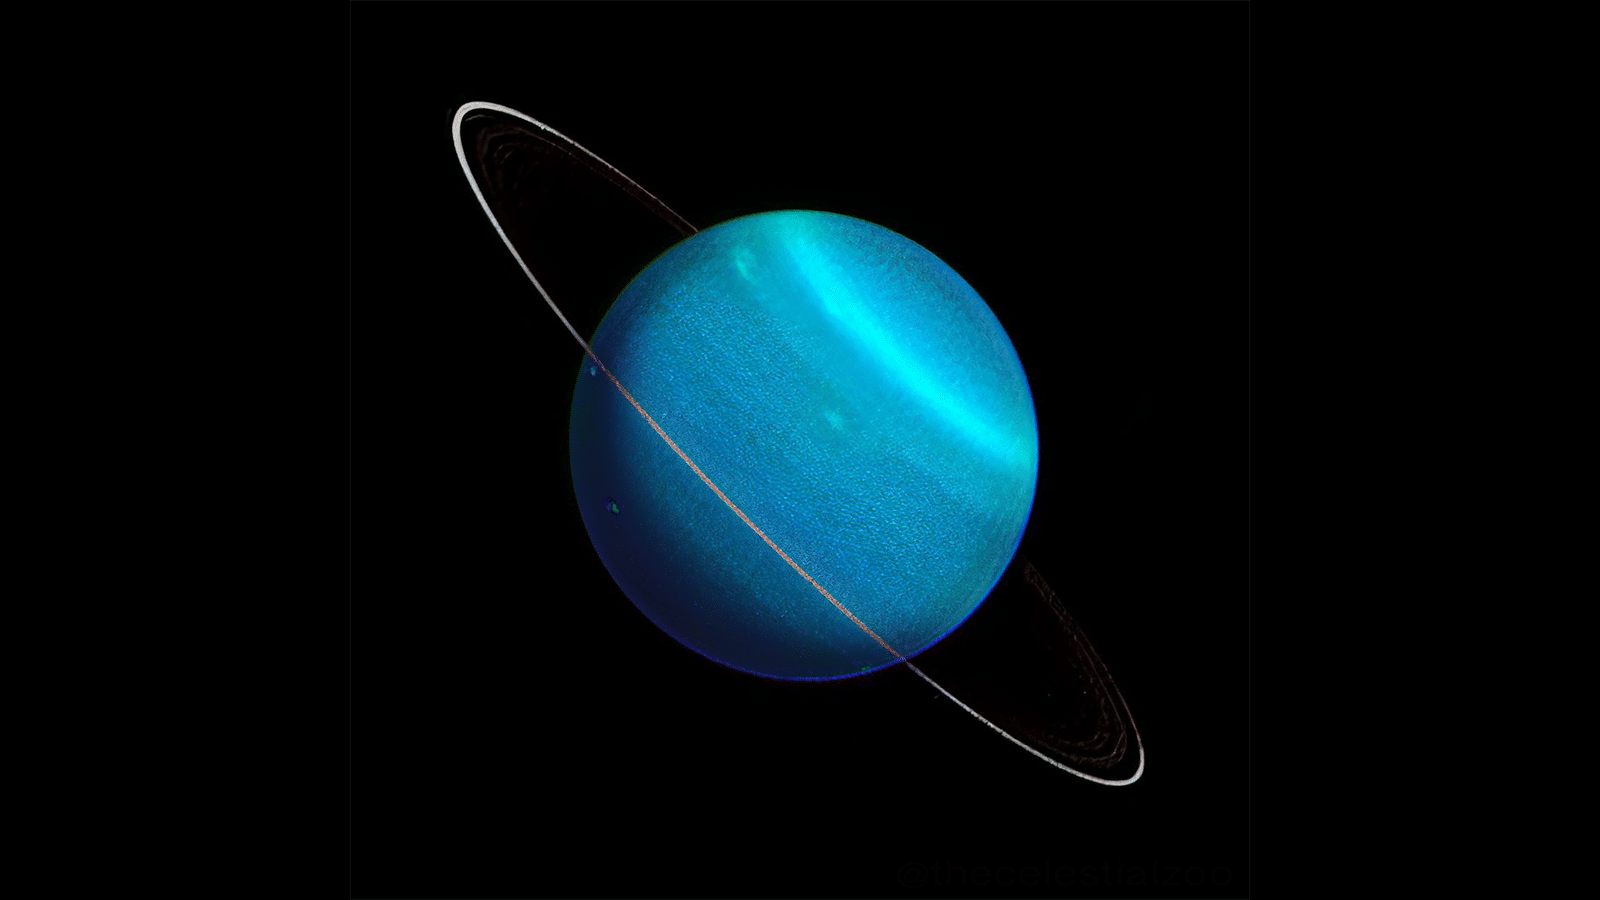 10 Amazing Facts about Uranus Planet